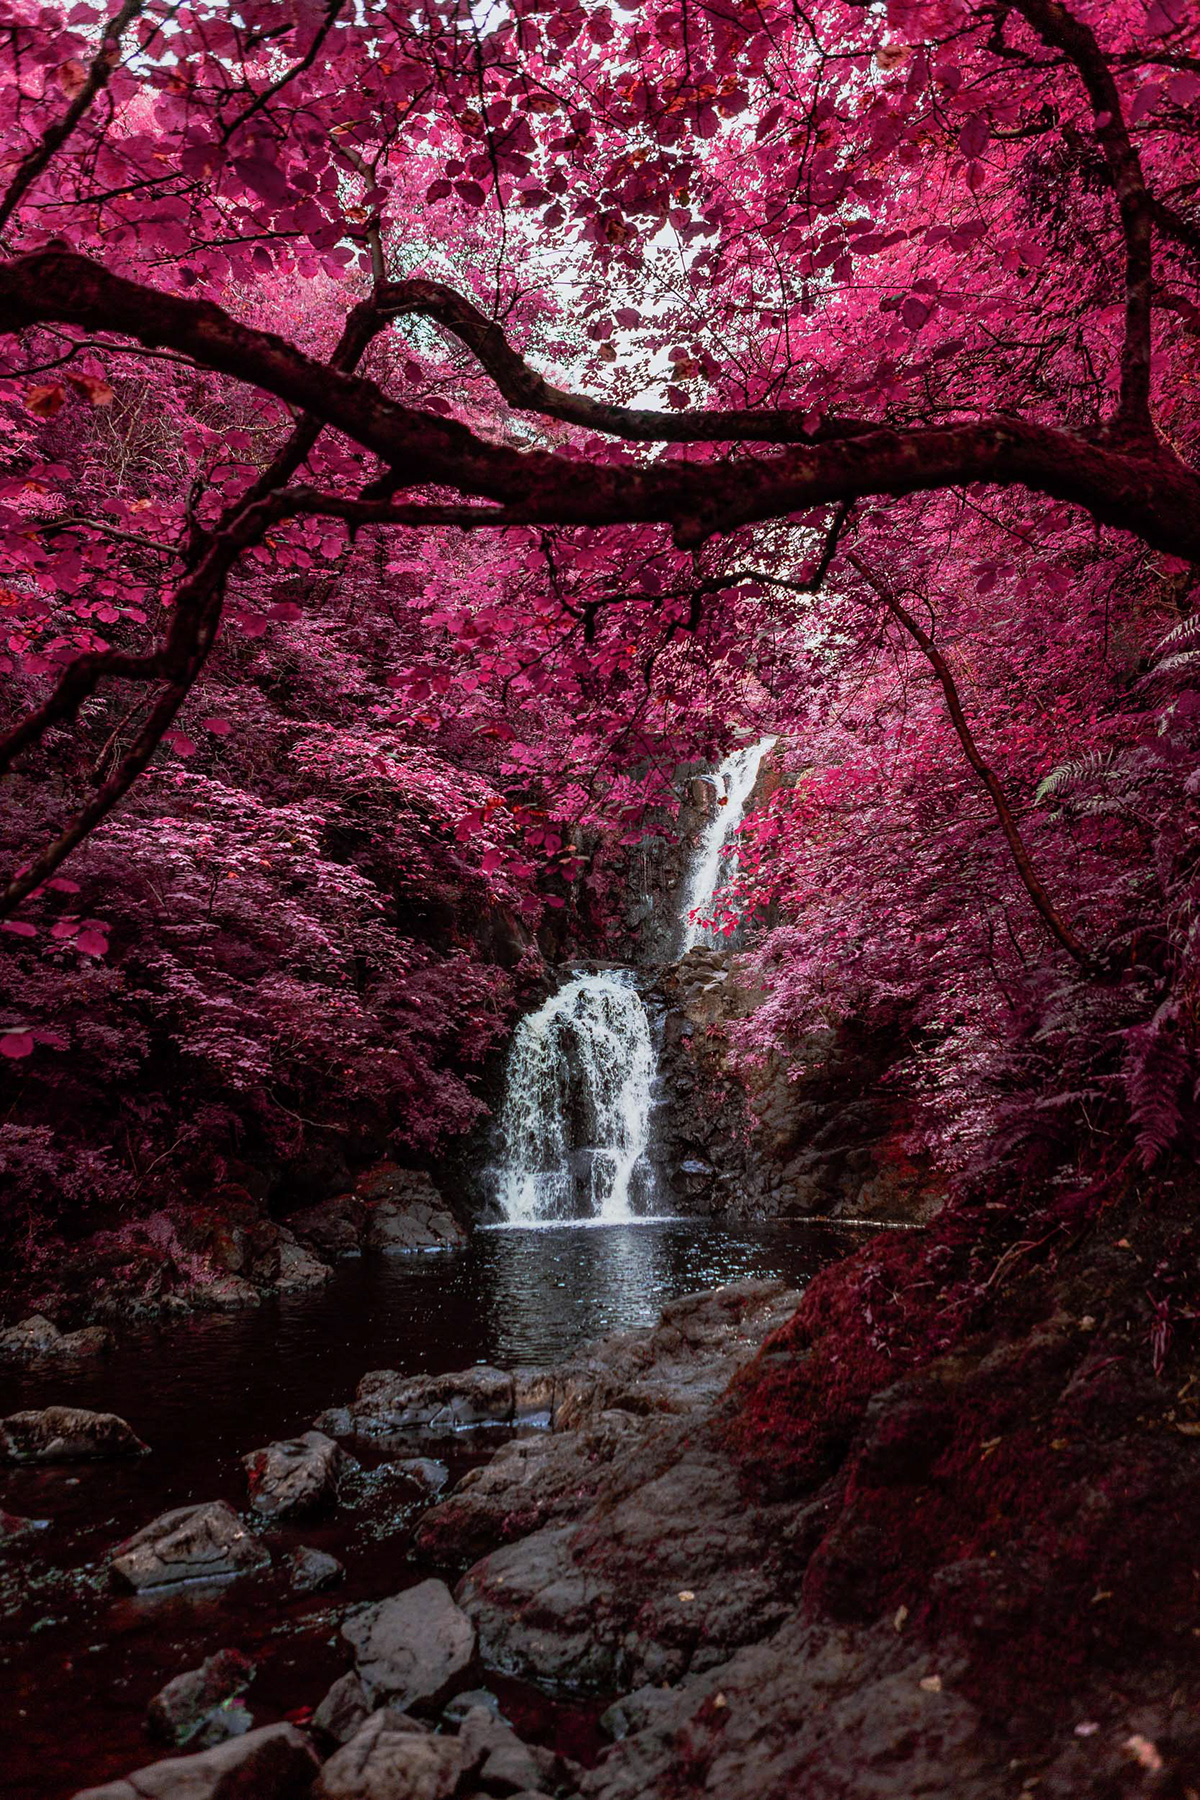 Aerochrome ferns infrared plants rainforest scotland botanical gardens colorful lush psychedelic